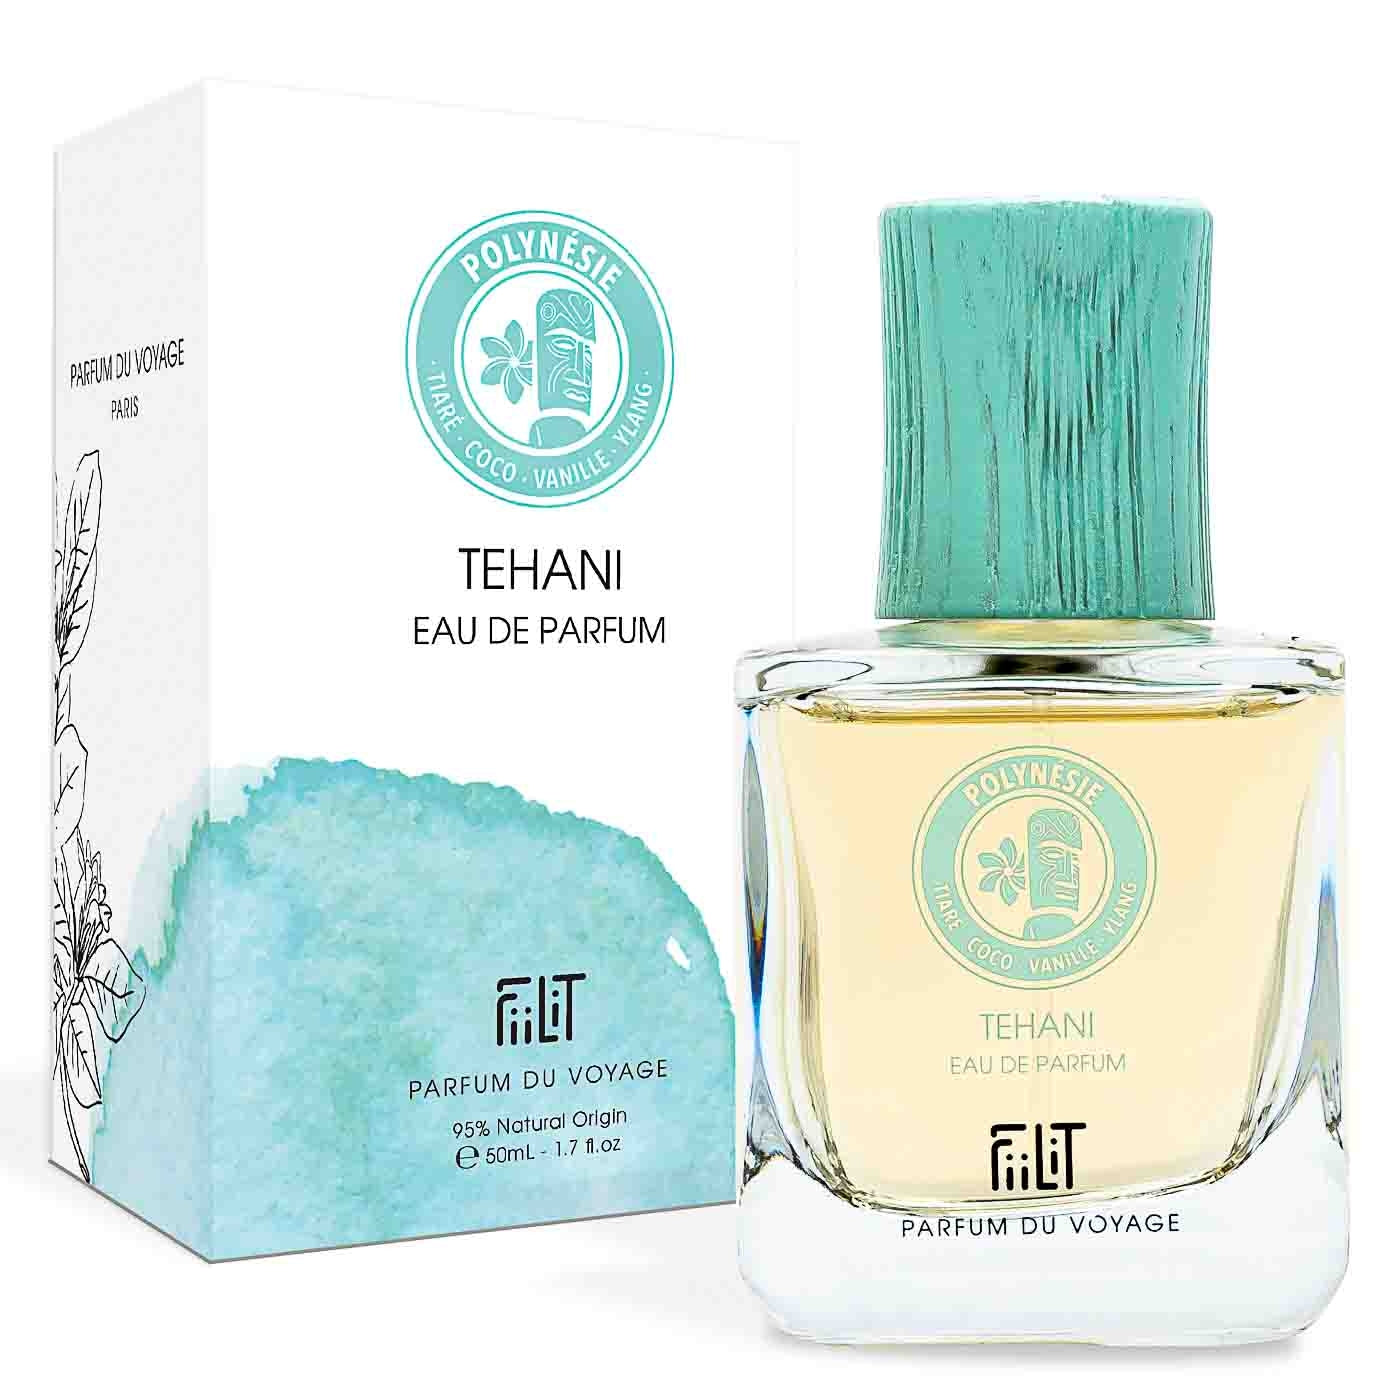 TEHANI - POLYNESIA Eau de Parfum